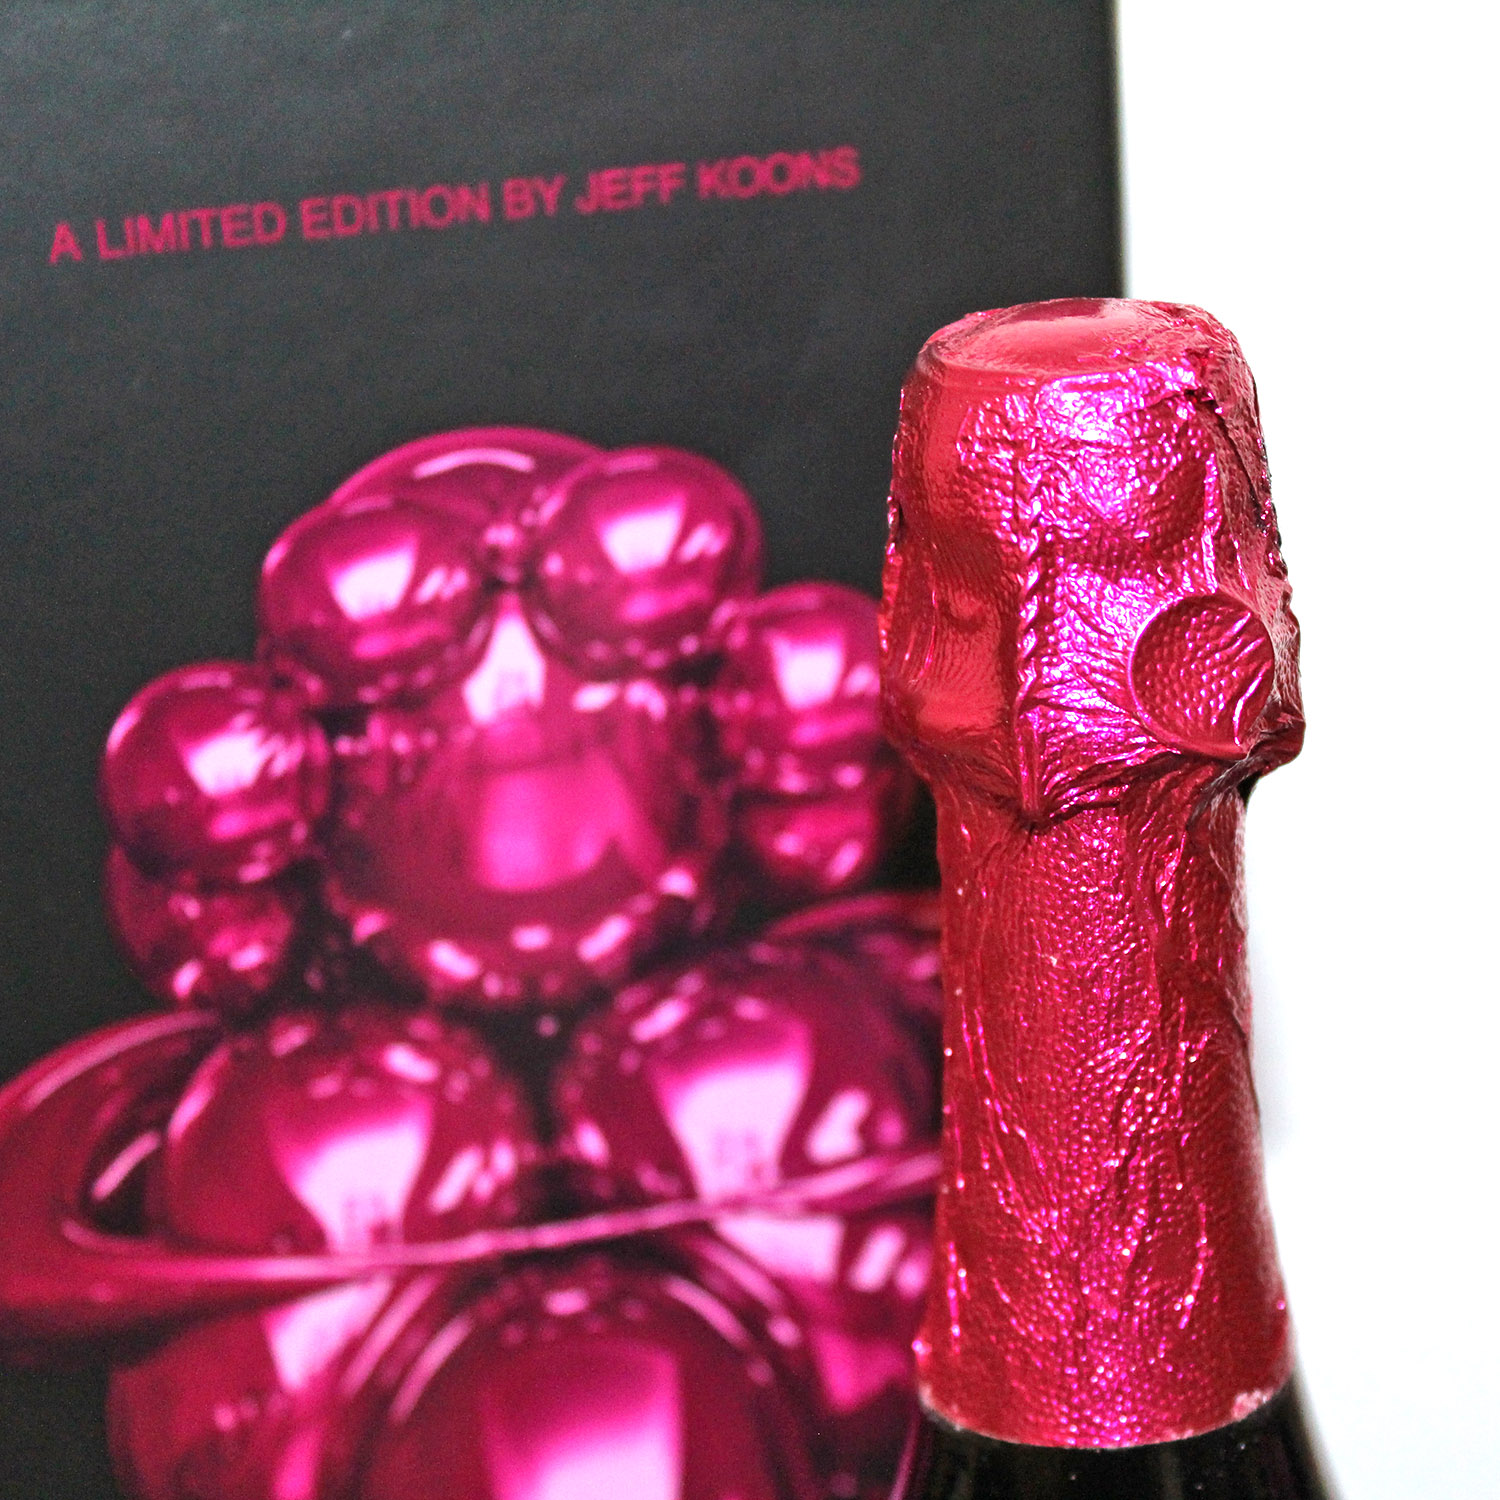 Dom Perignon Rose Vintage Champagner 2003 Jeff Koons Edition Capsule